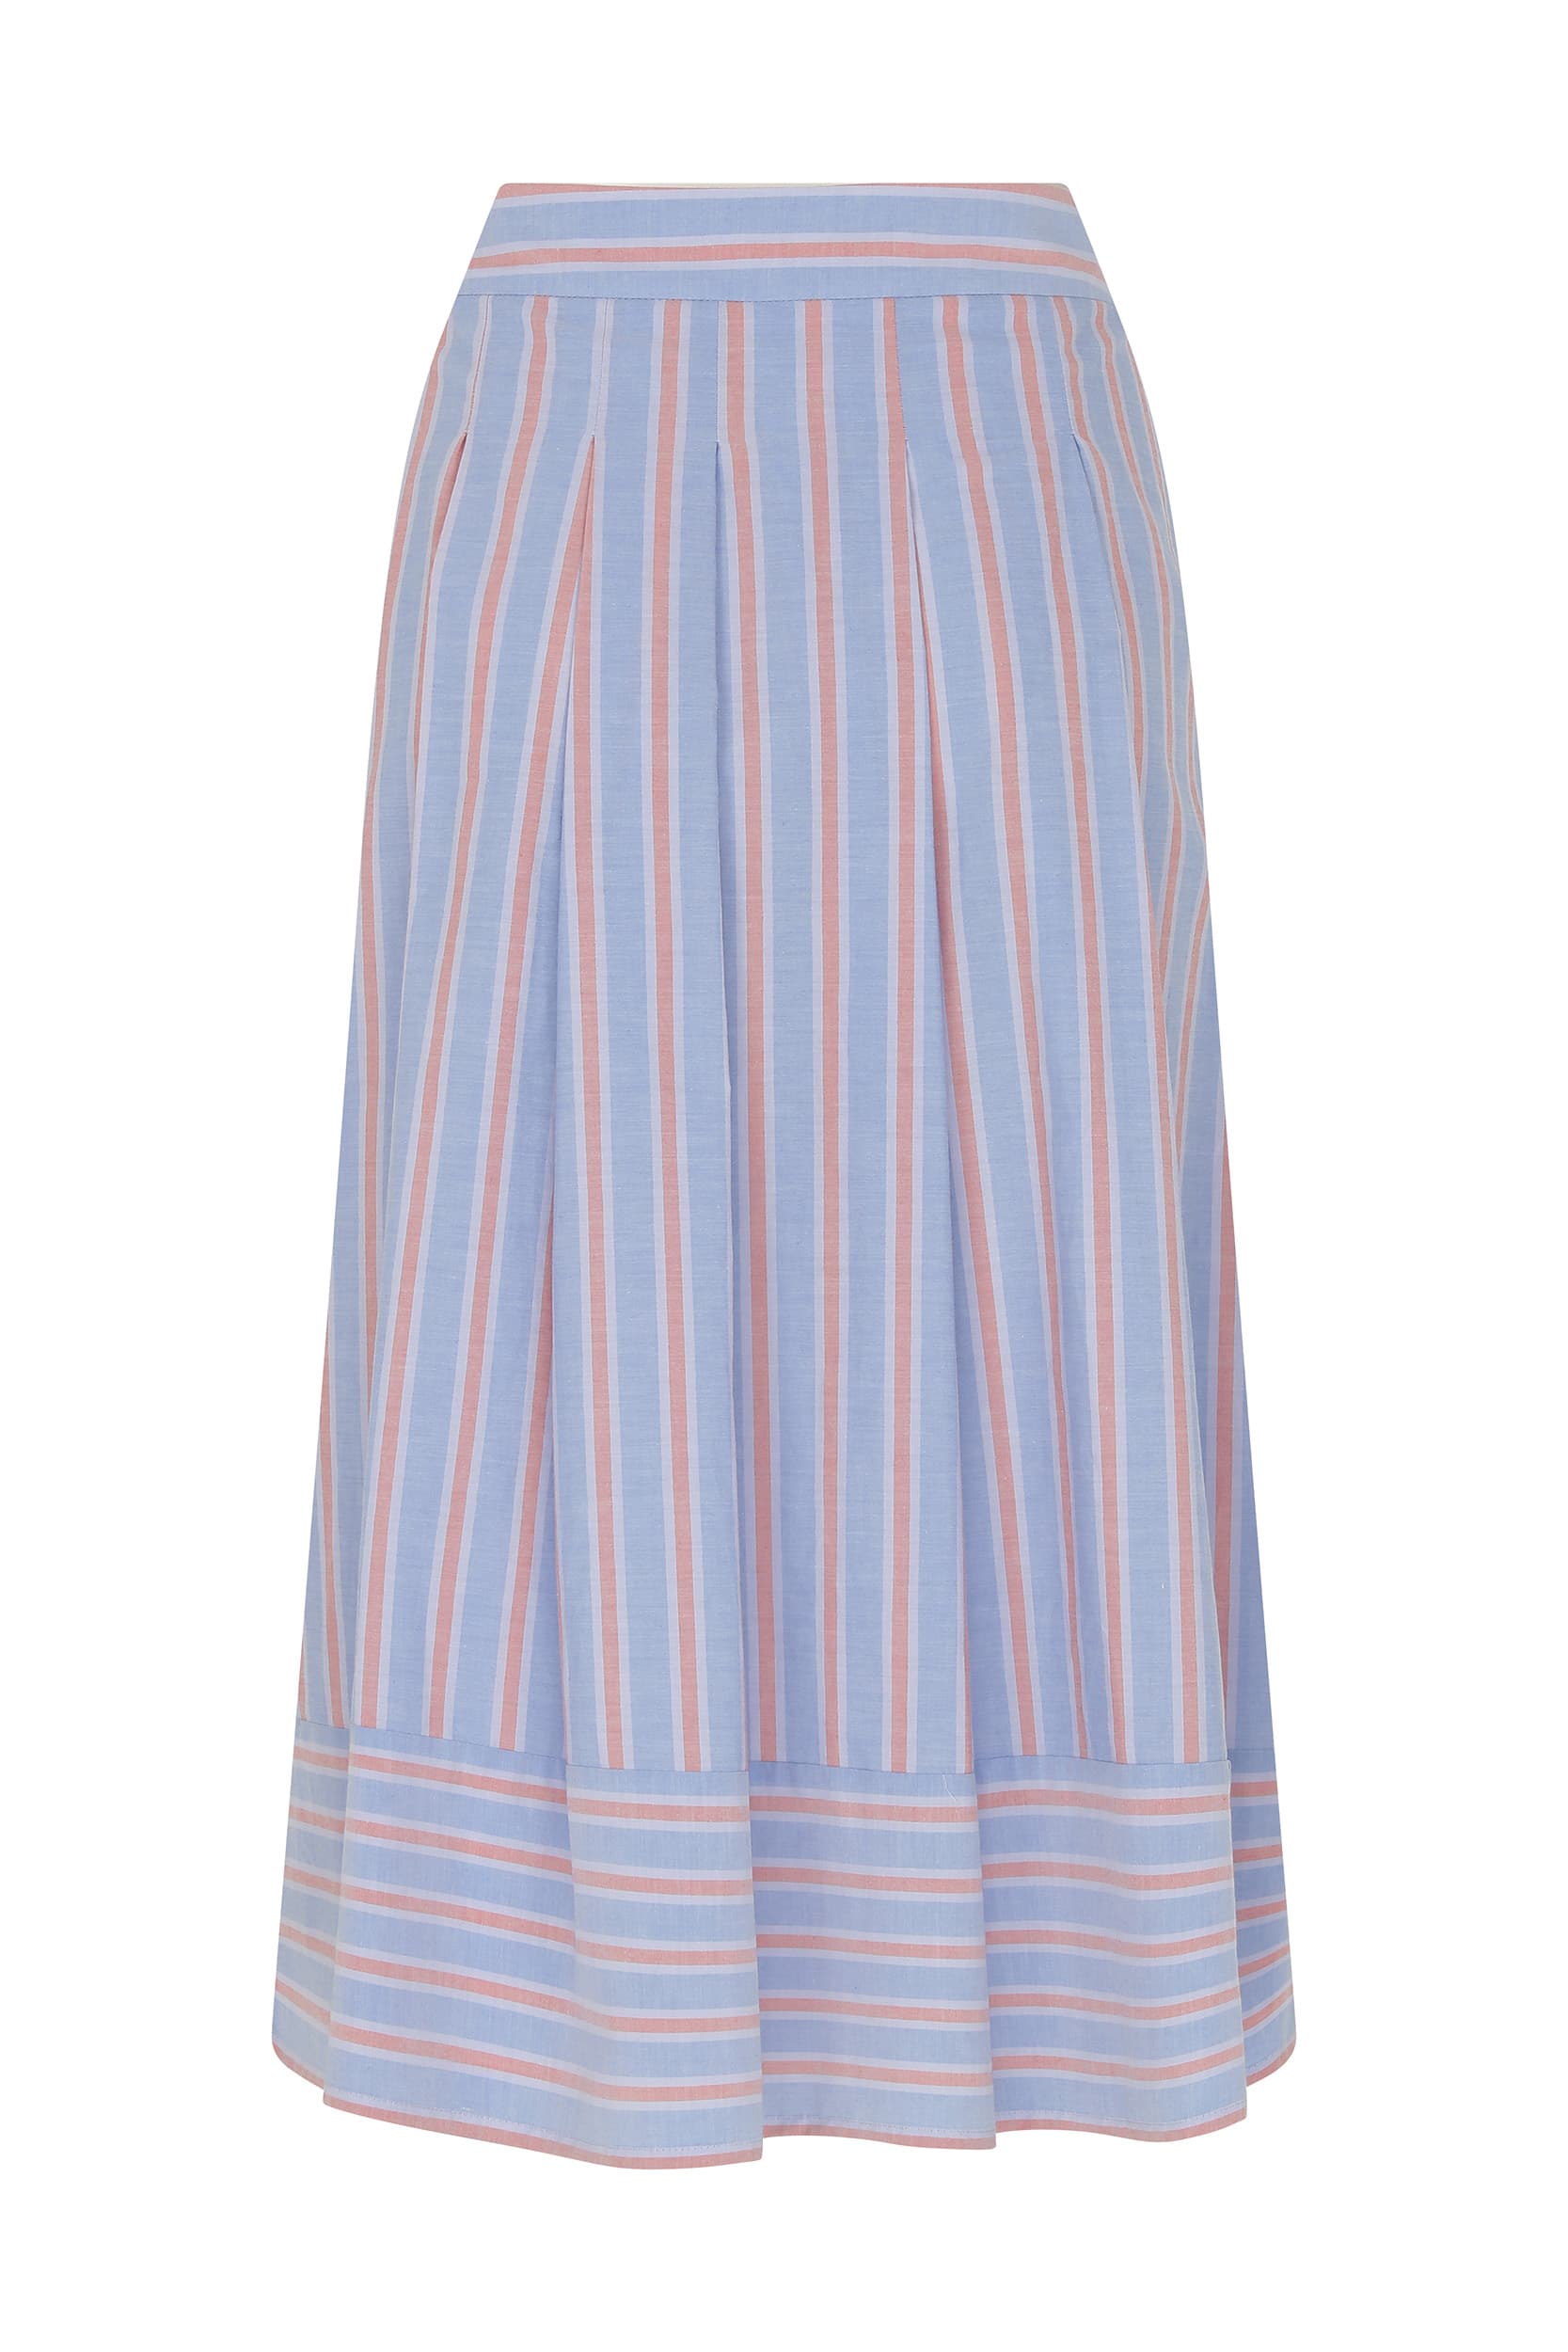 Blue Pink Line Patterened Pleated Skirt -- [ORIGINAL]